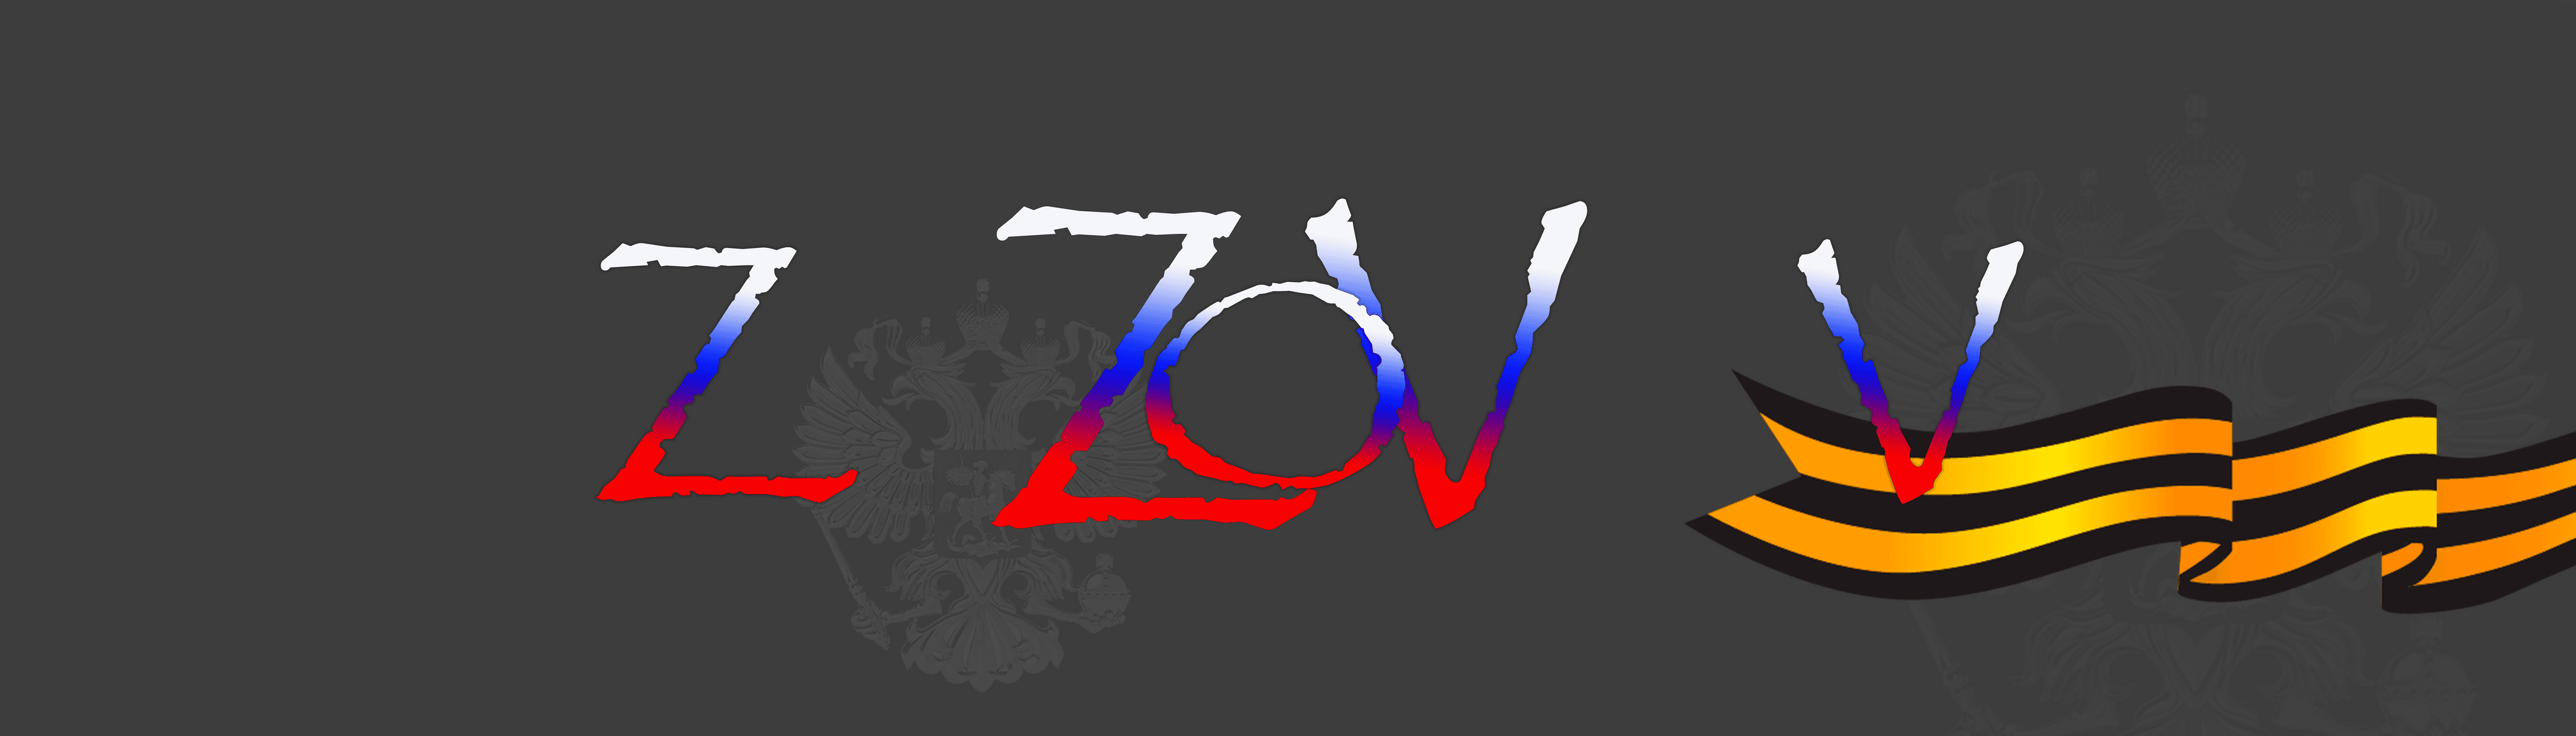 ZoV banner